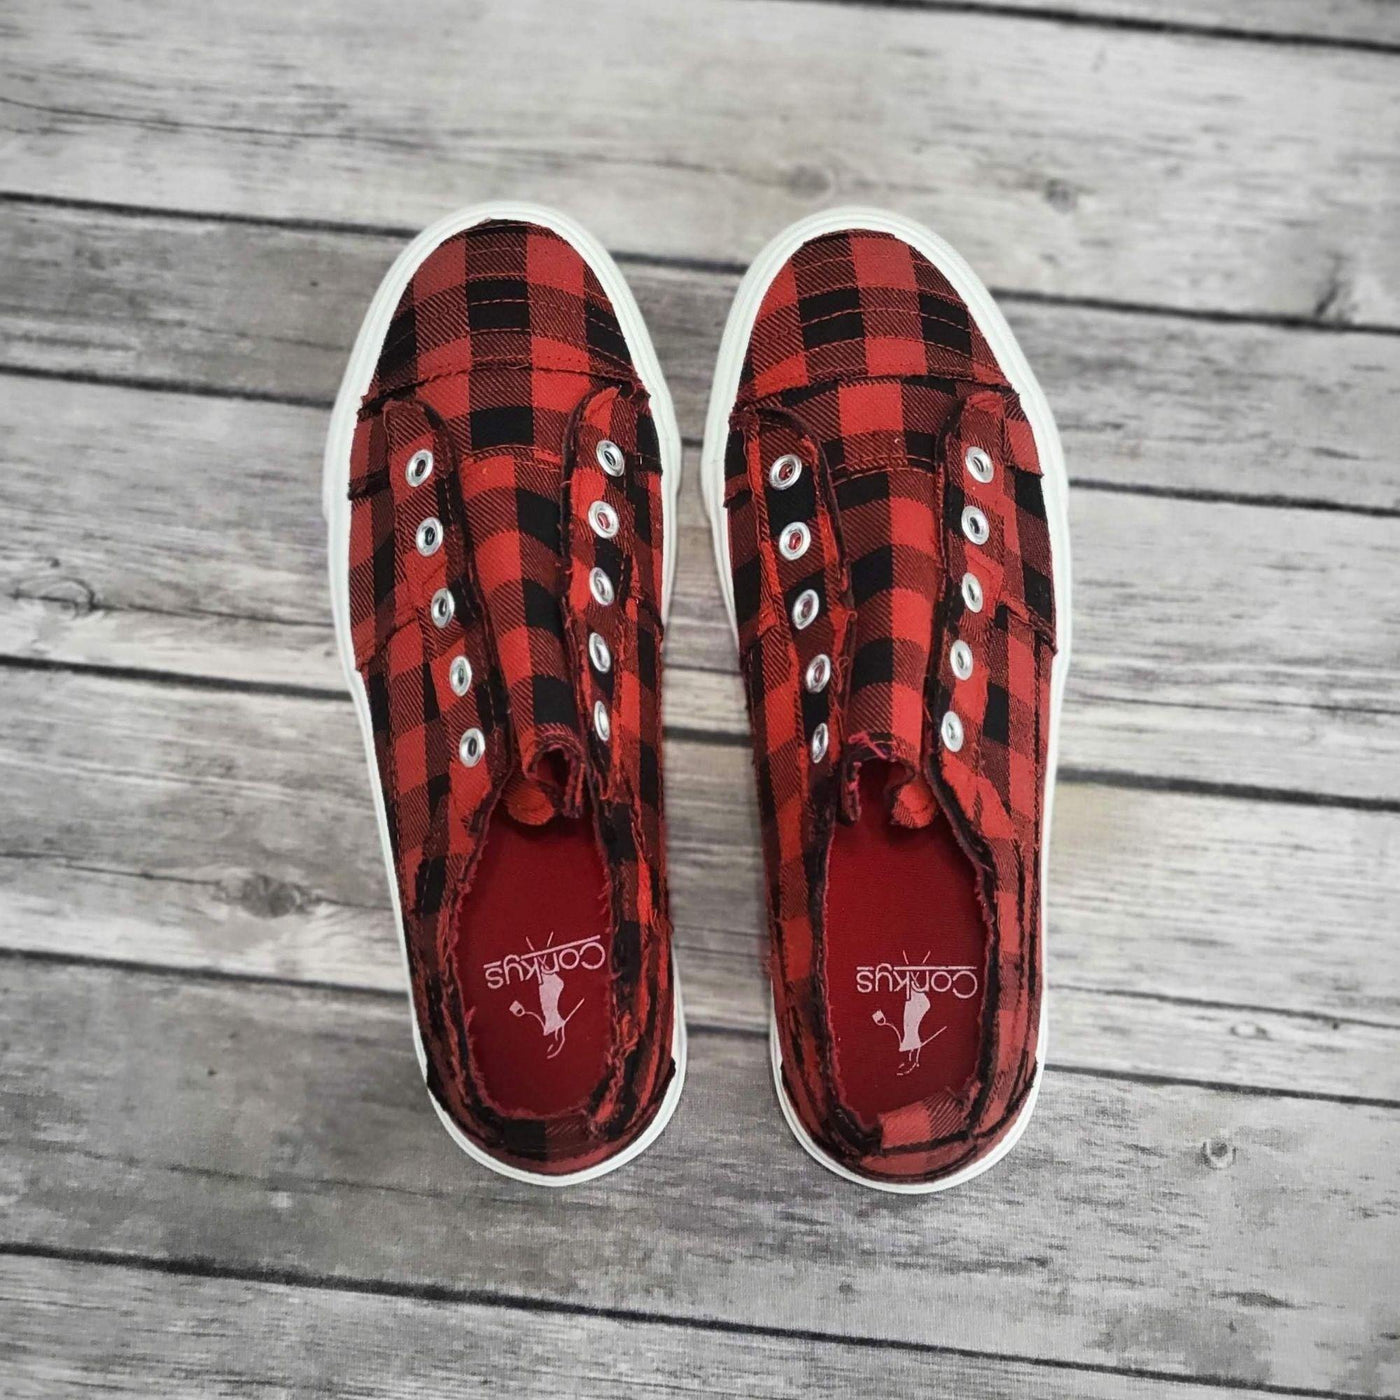 Corkys Babalu Red Buffalo Plaid Slip On Fashion Sneaker - Shoes - dalia + jade 